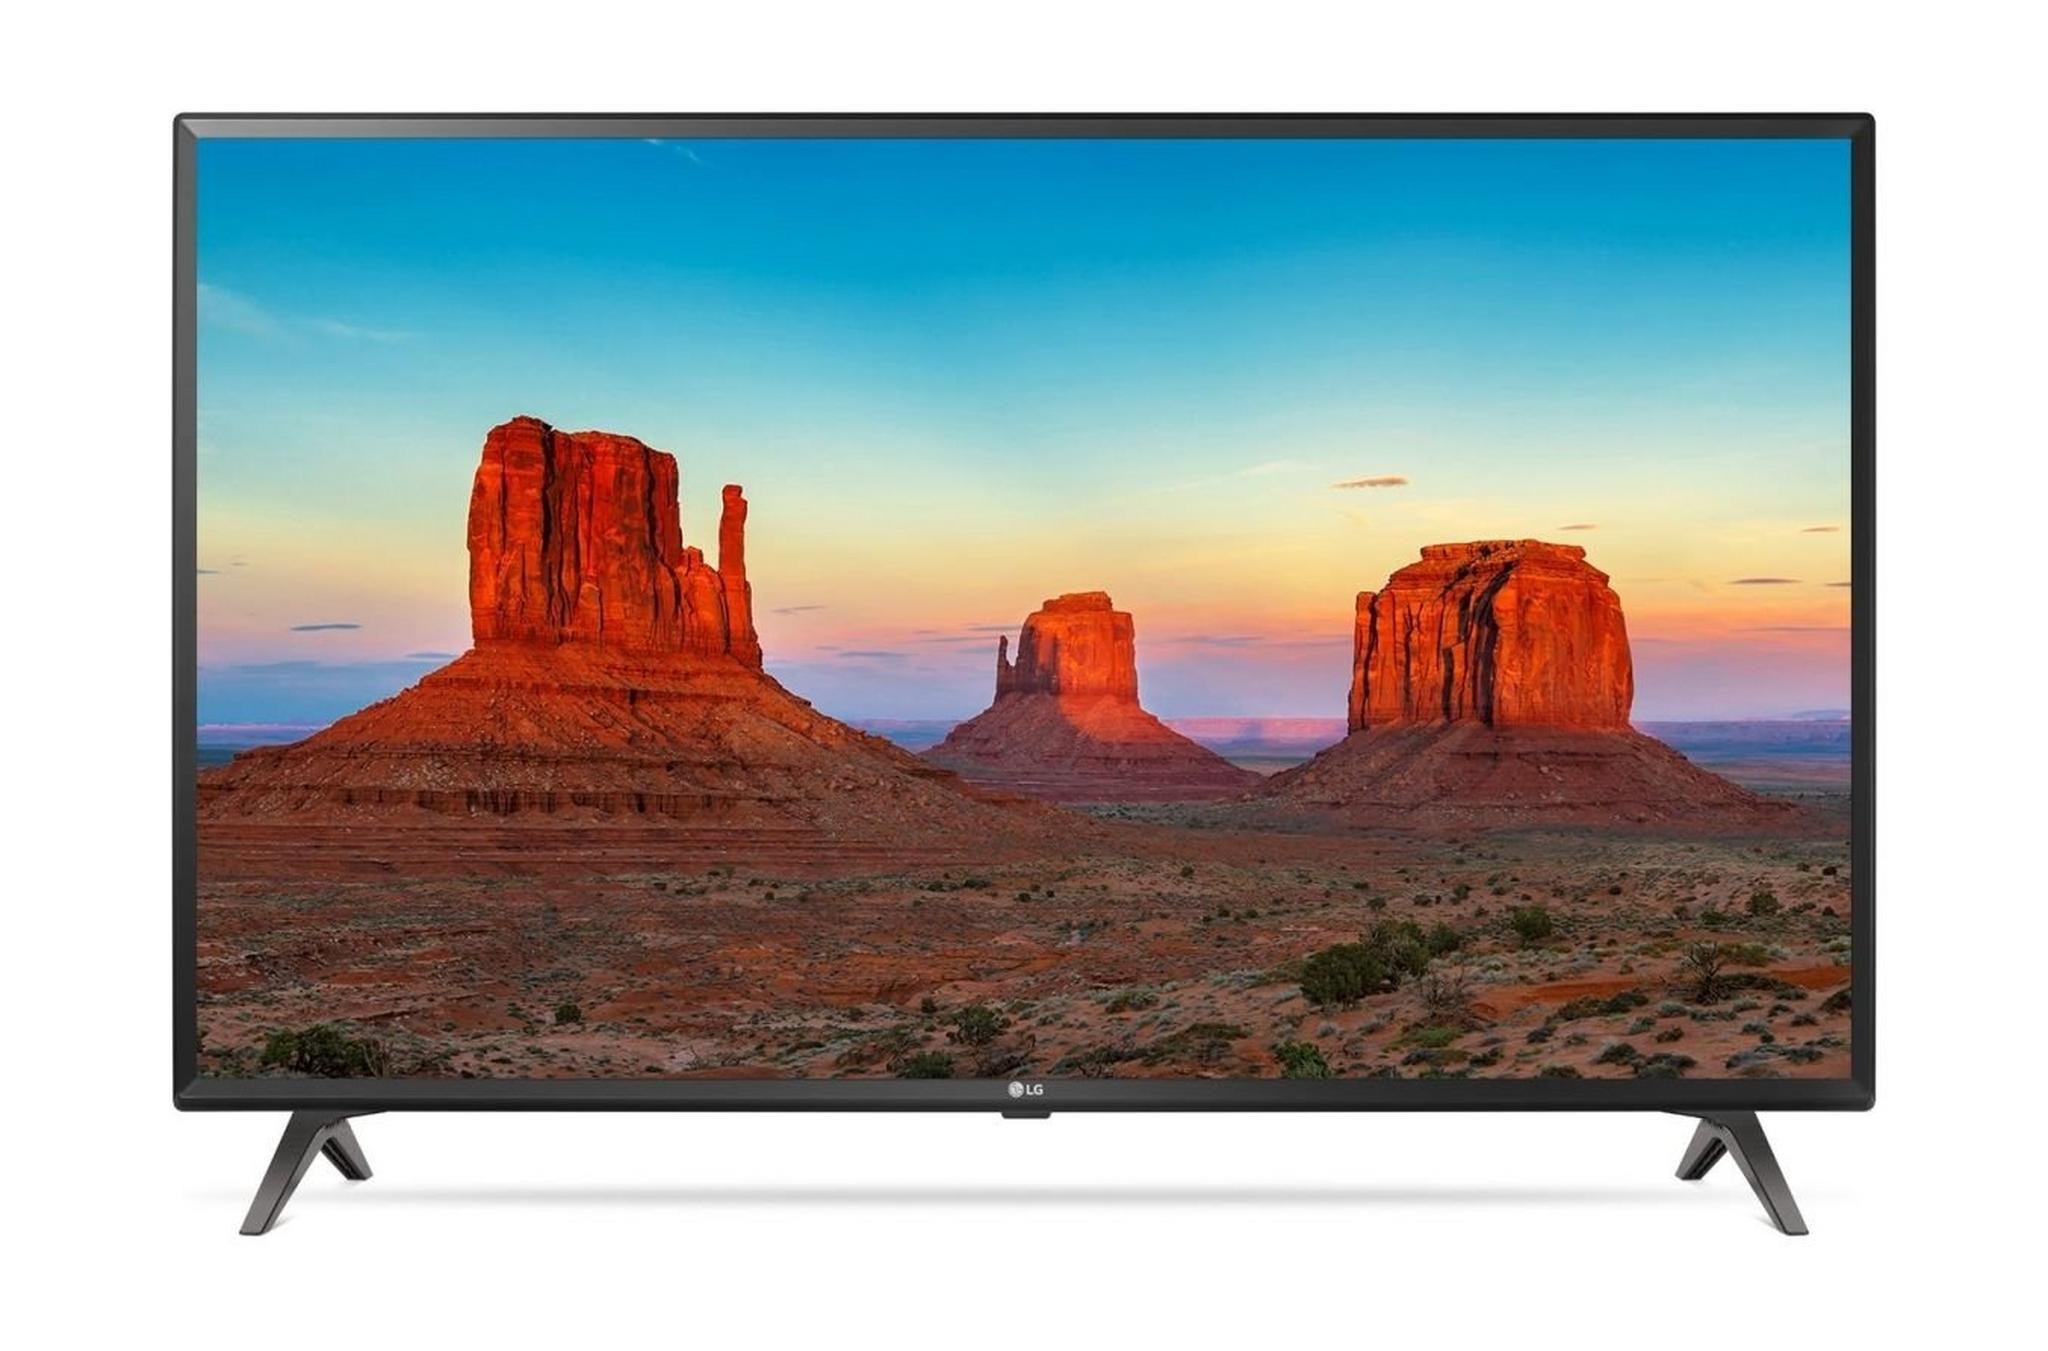 LG 49 inch Ultra HD Smart LED TV - 49UK6300PVB